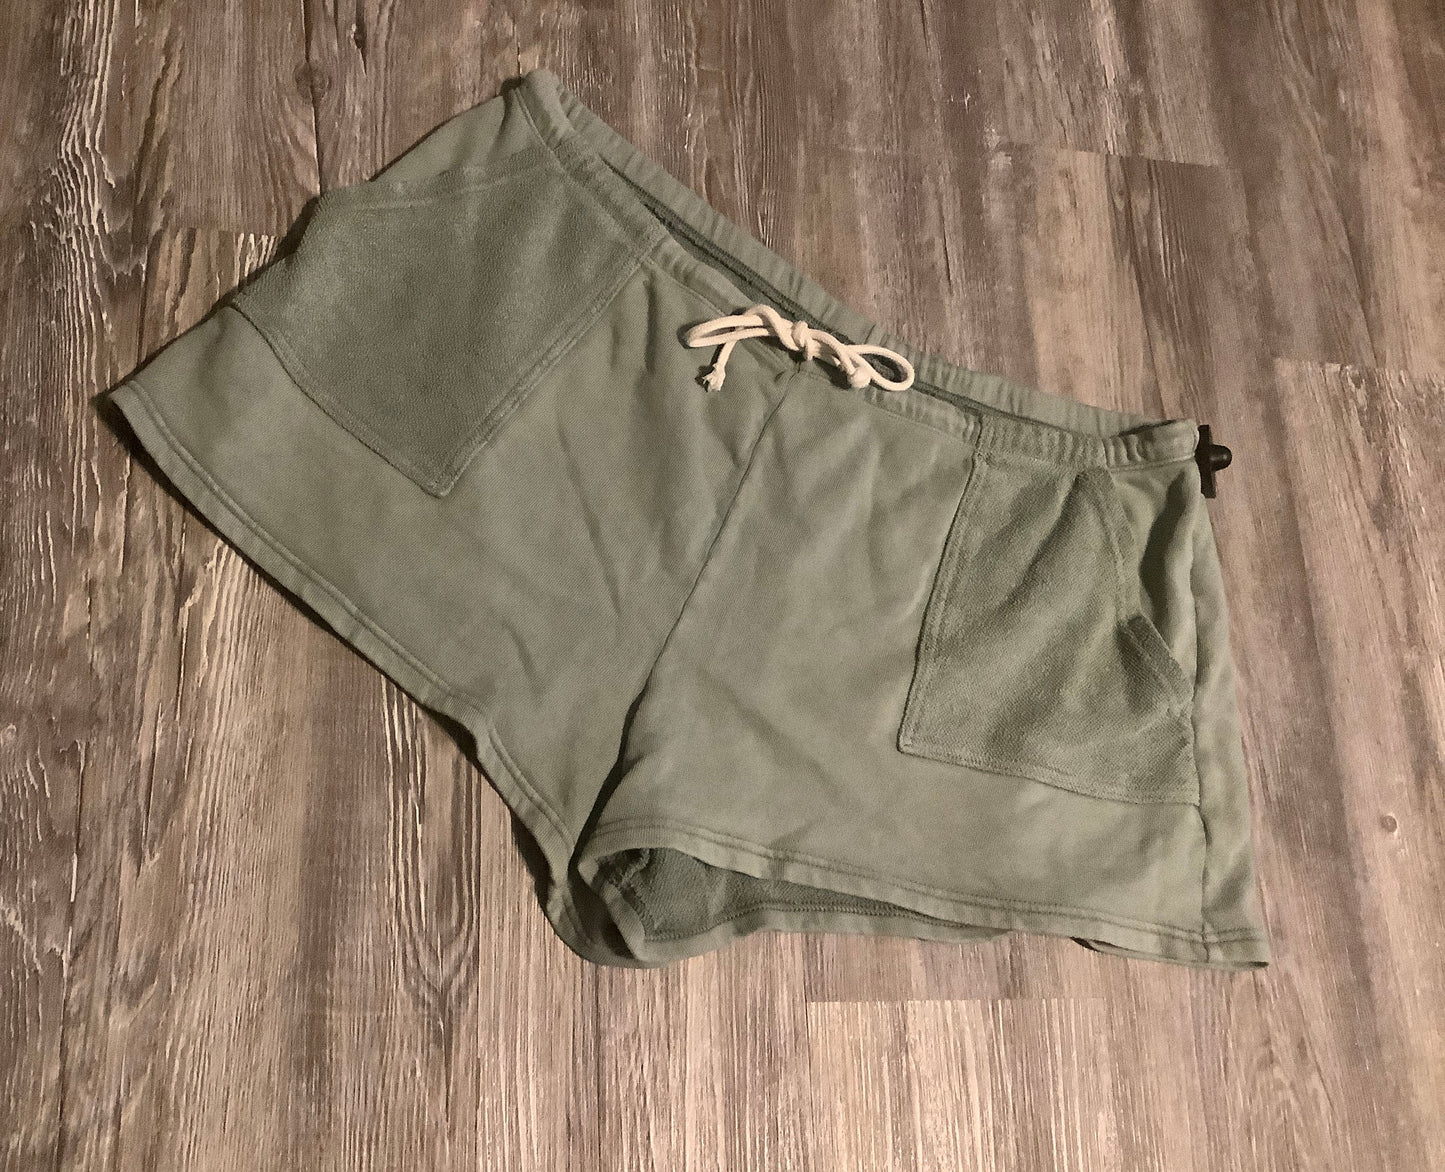 Green Shorts Aerie, Size Xxl